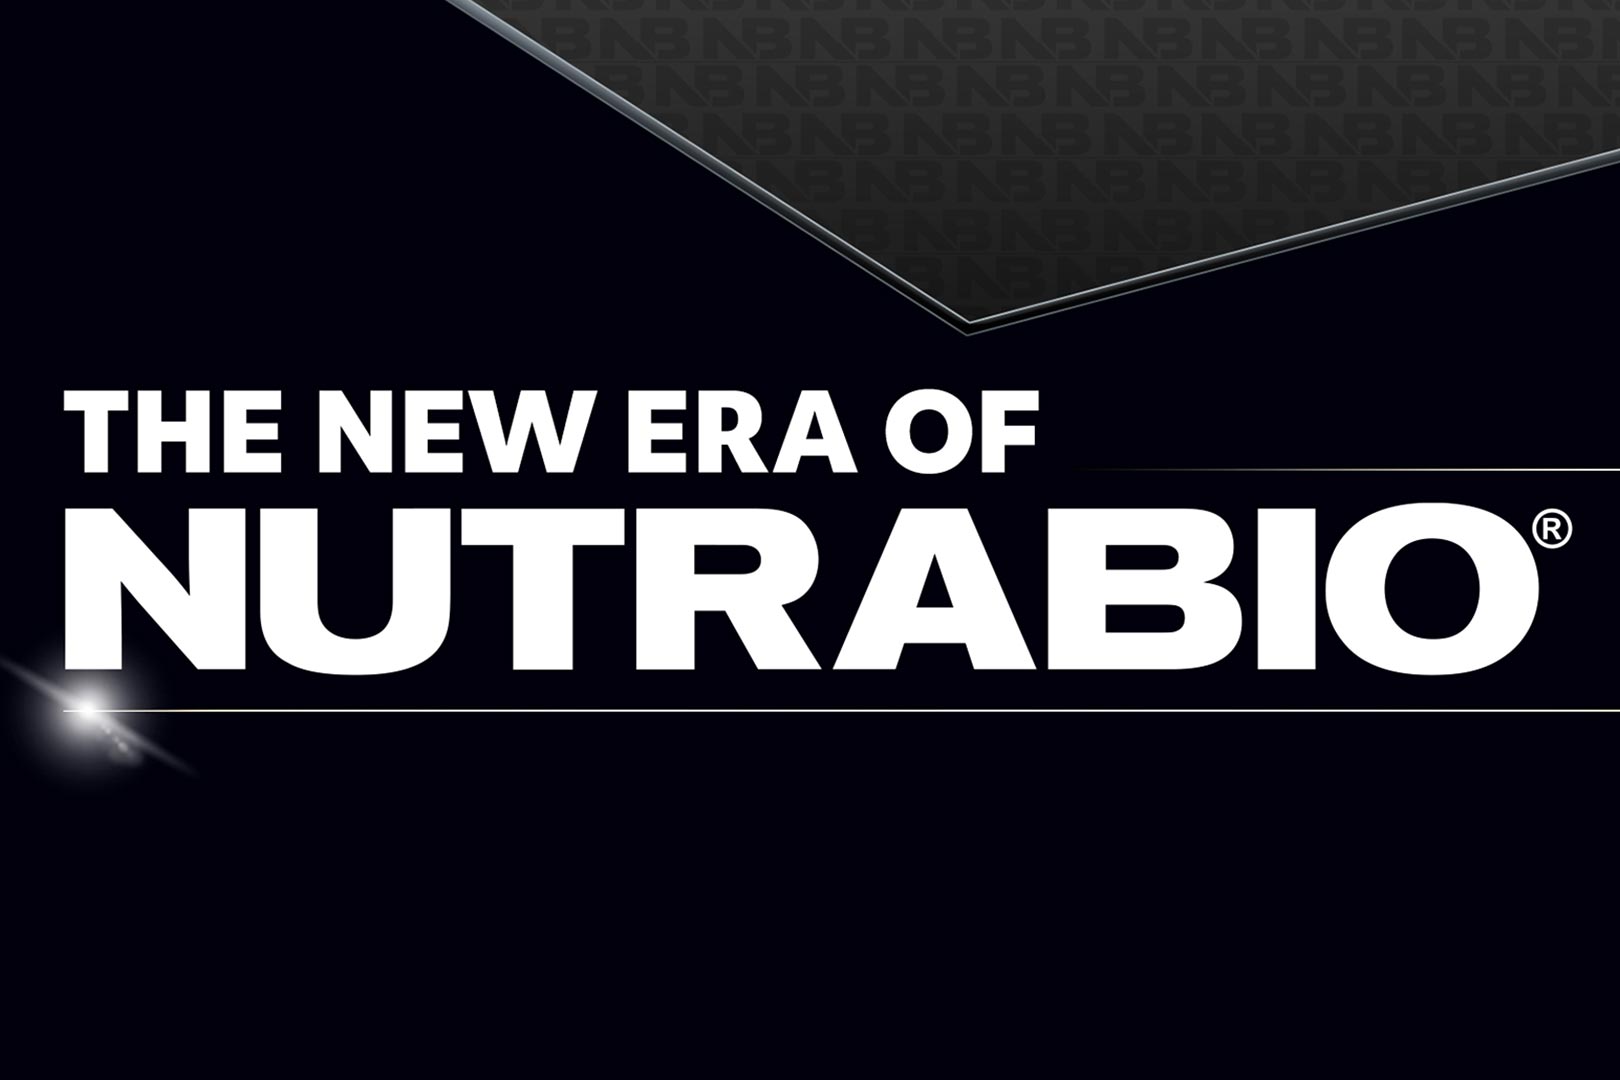 The New Era Of Nutrabio